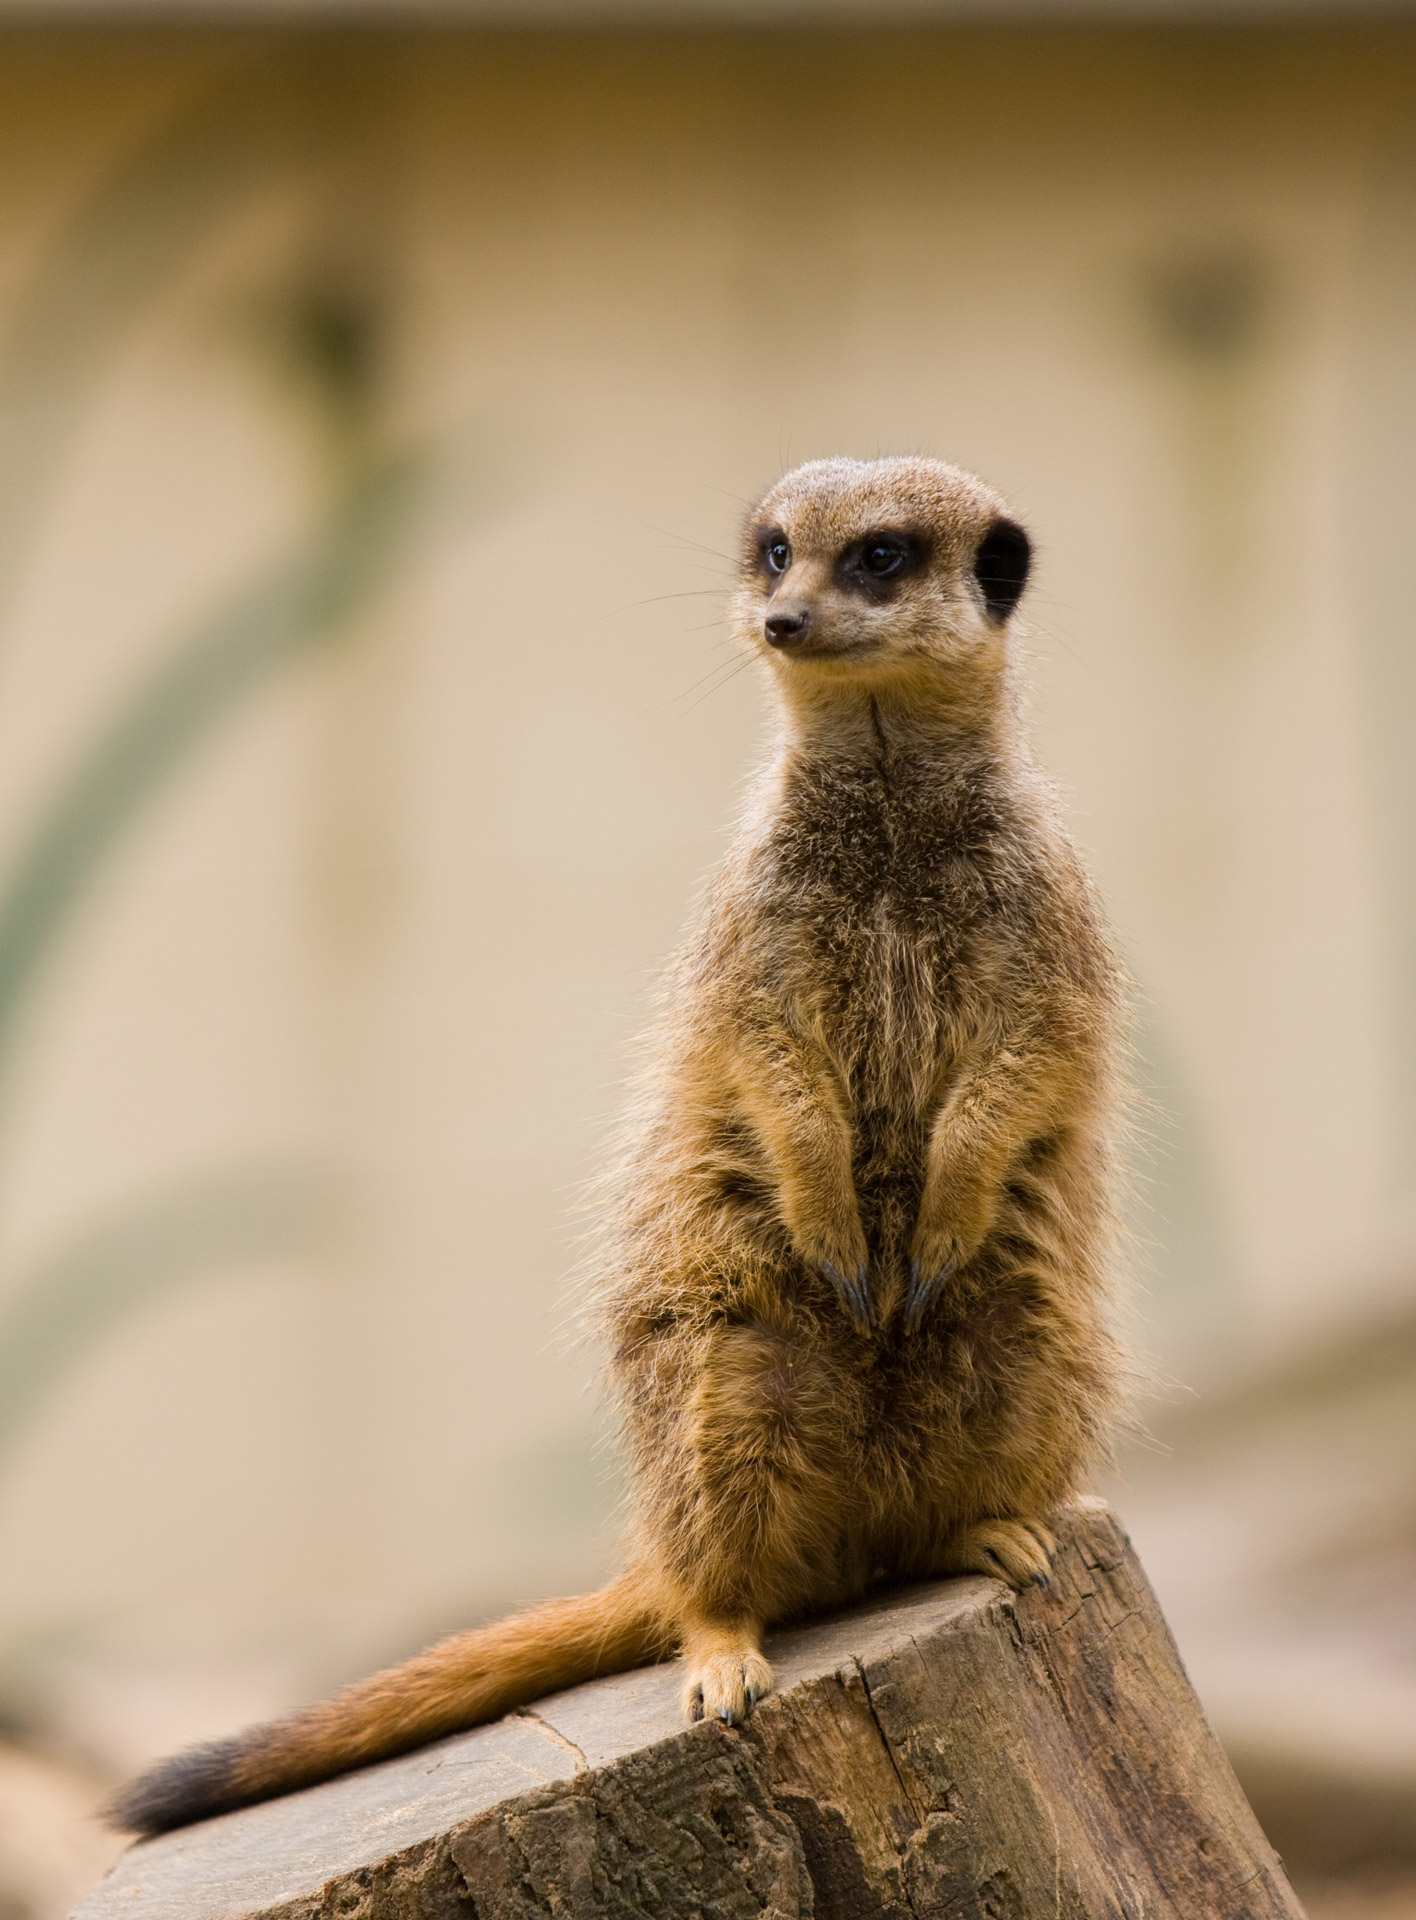 Portrait of a cute little Meerkat standing on a log